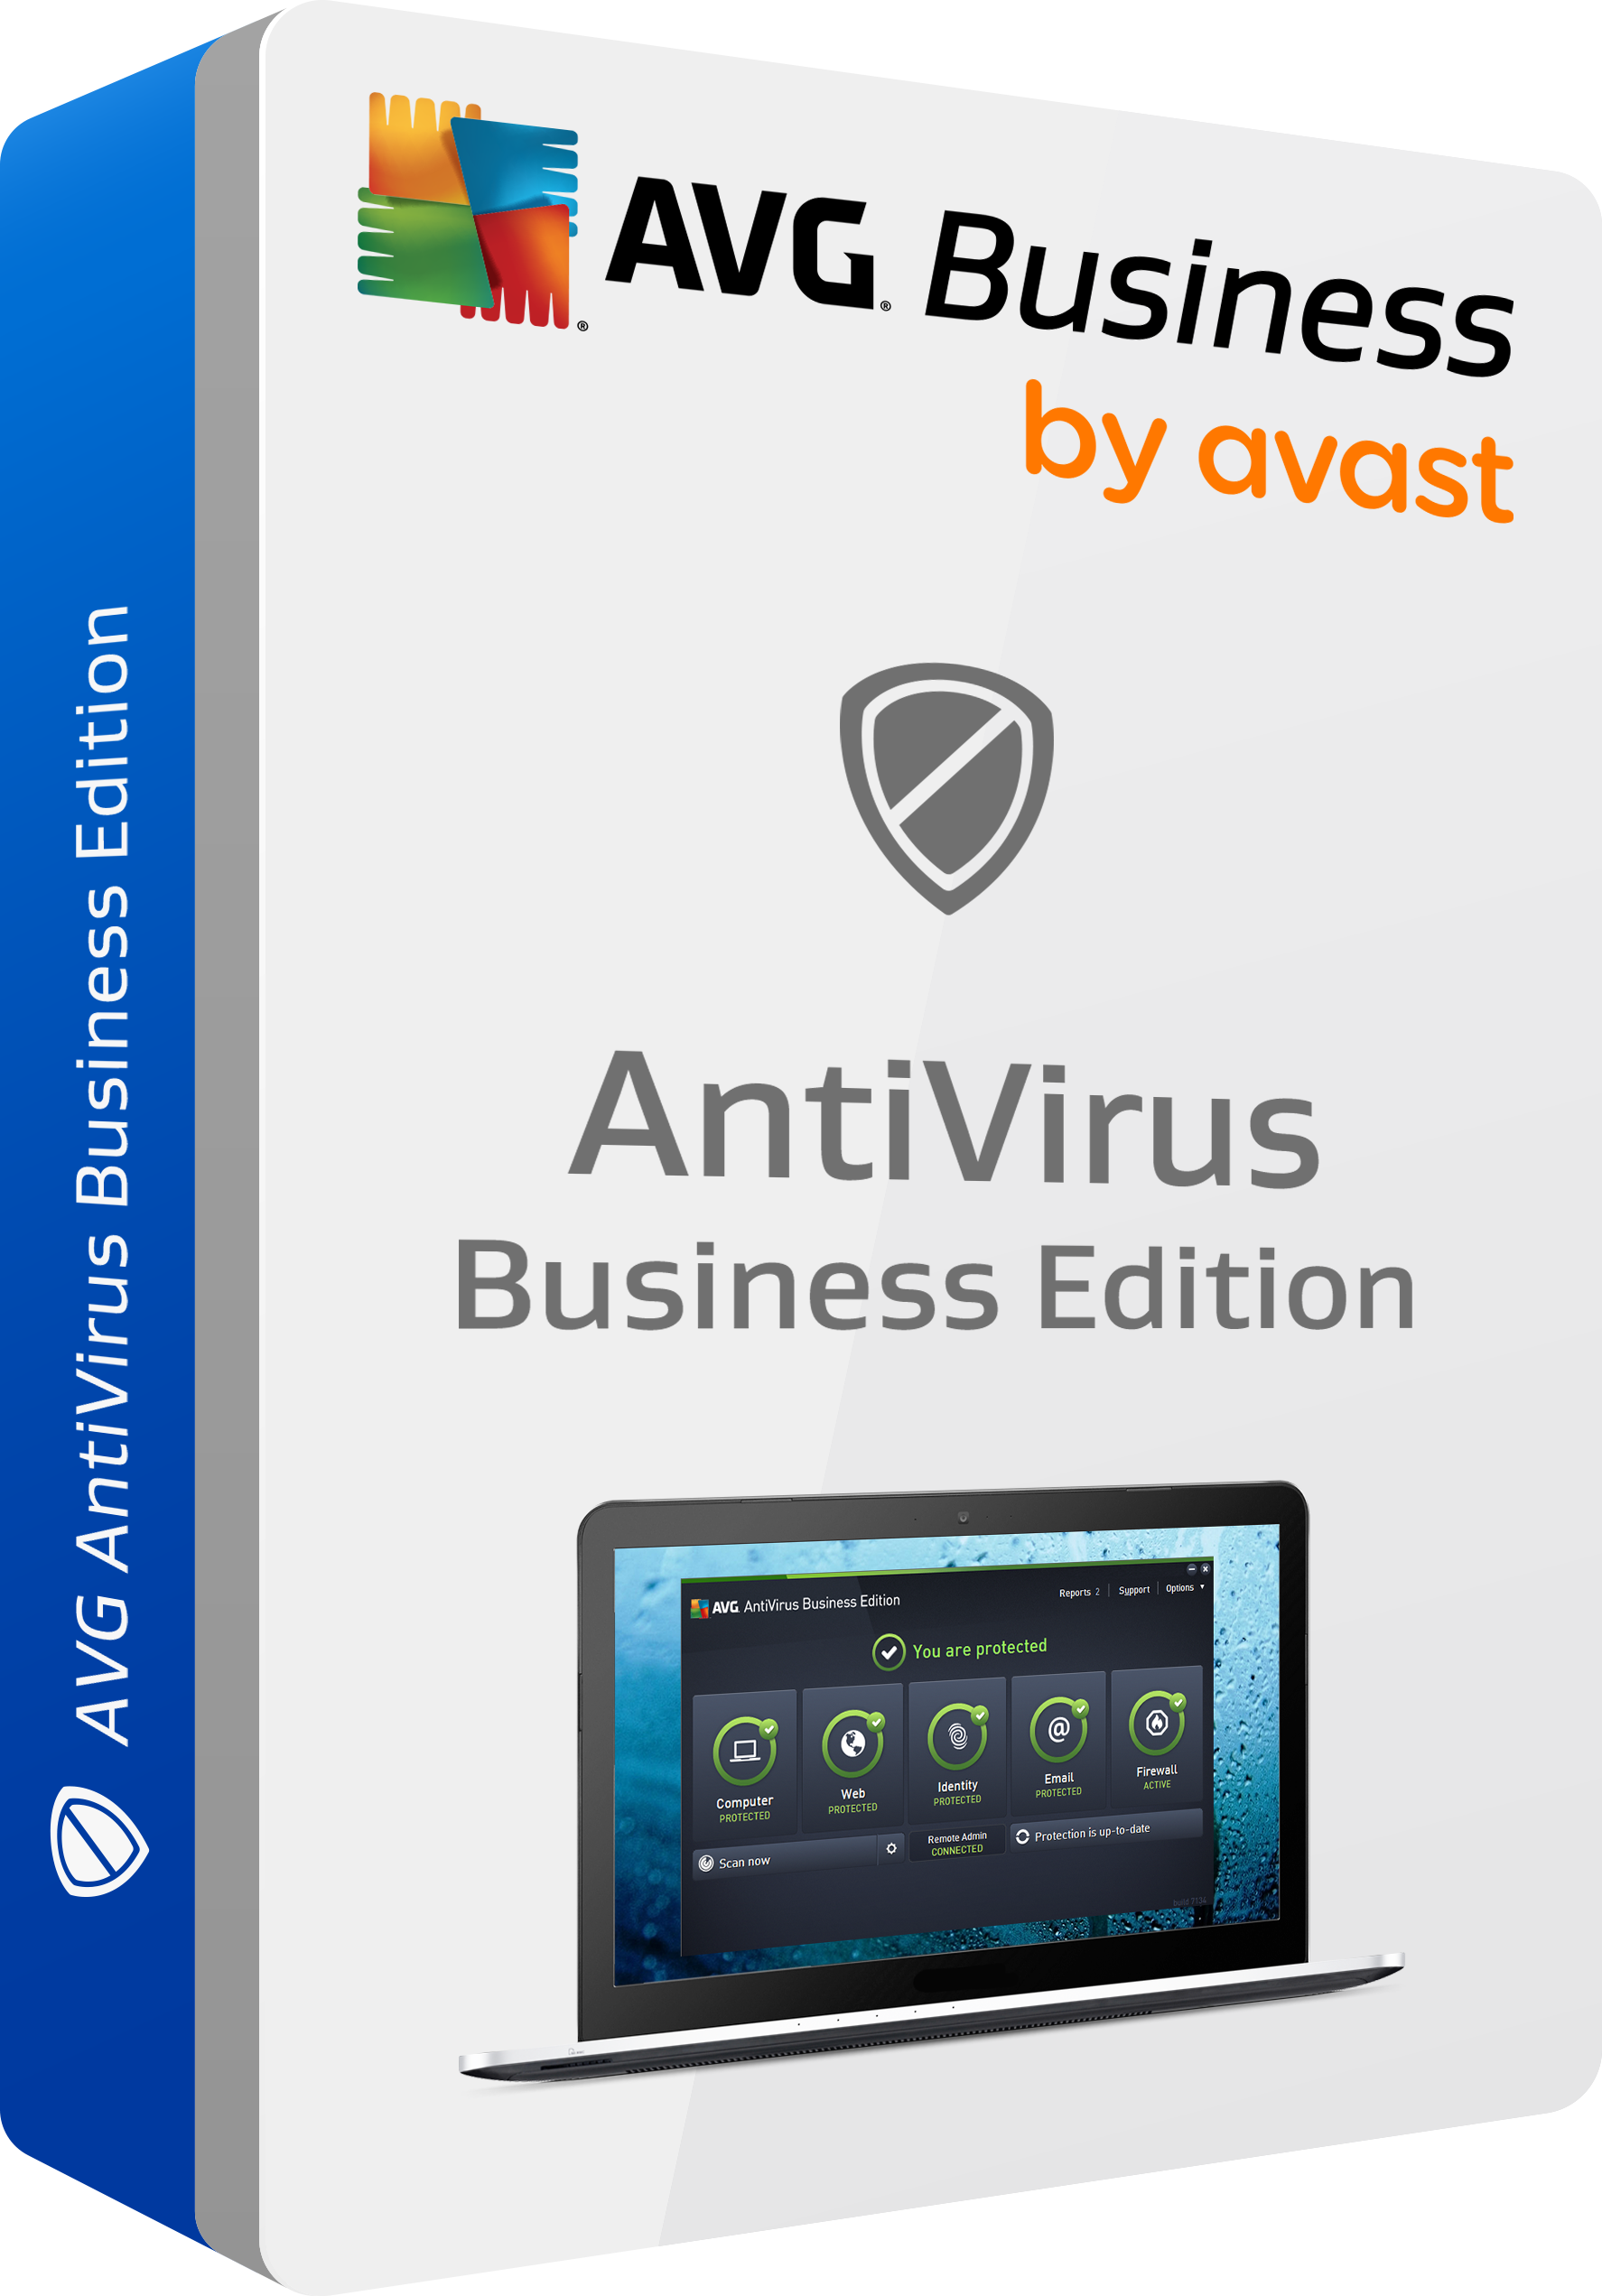 AVG Antivirus Business Edition, 1 Year License